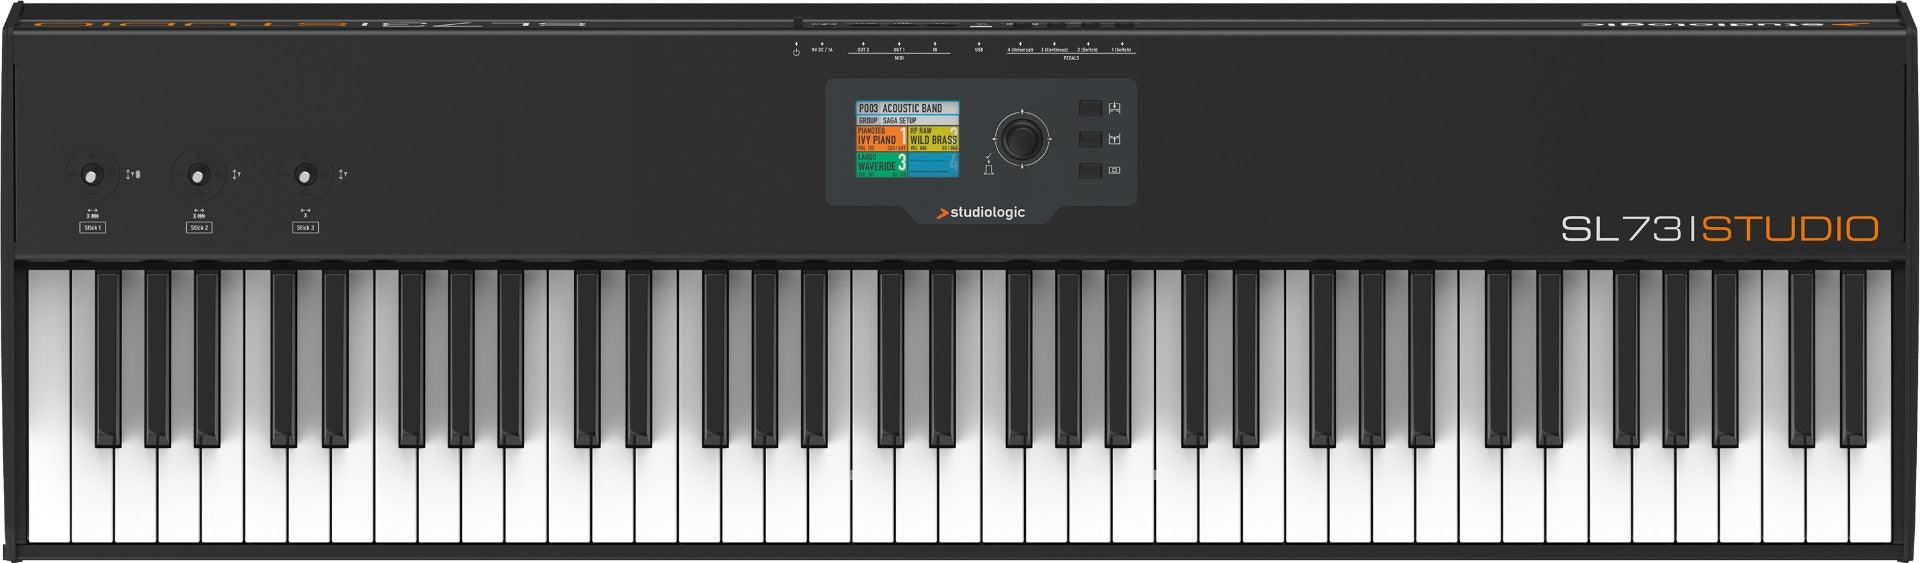 Studiologic SL73  Studio Keyboard Controller